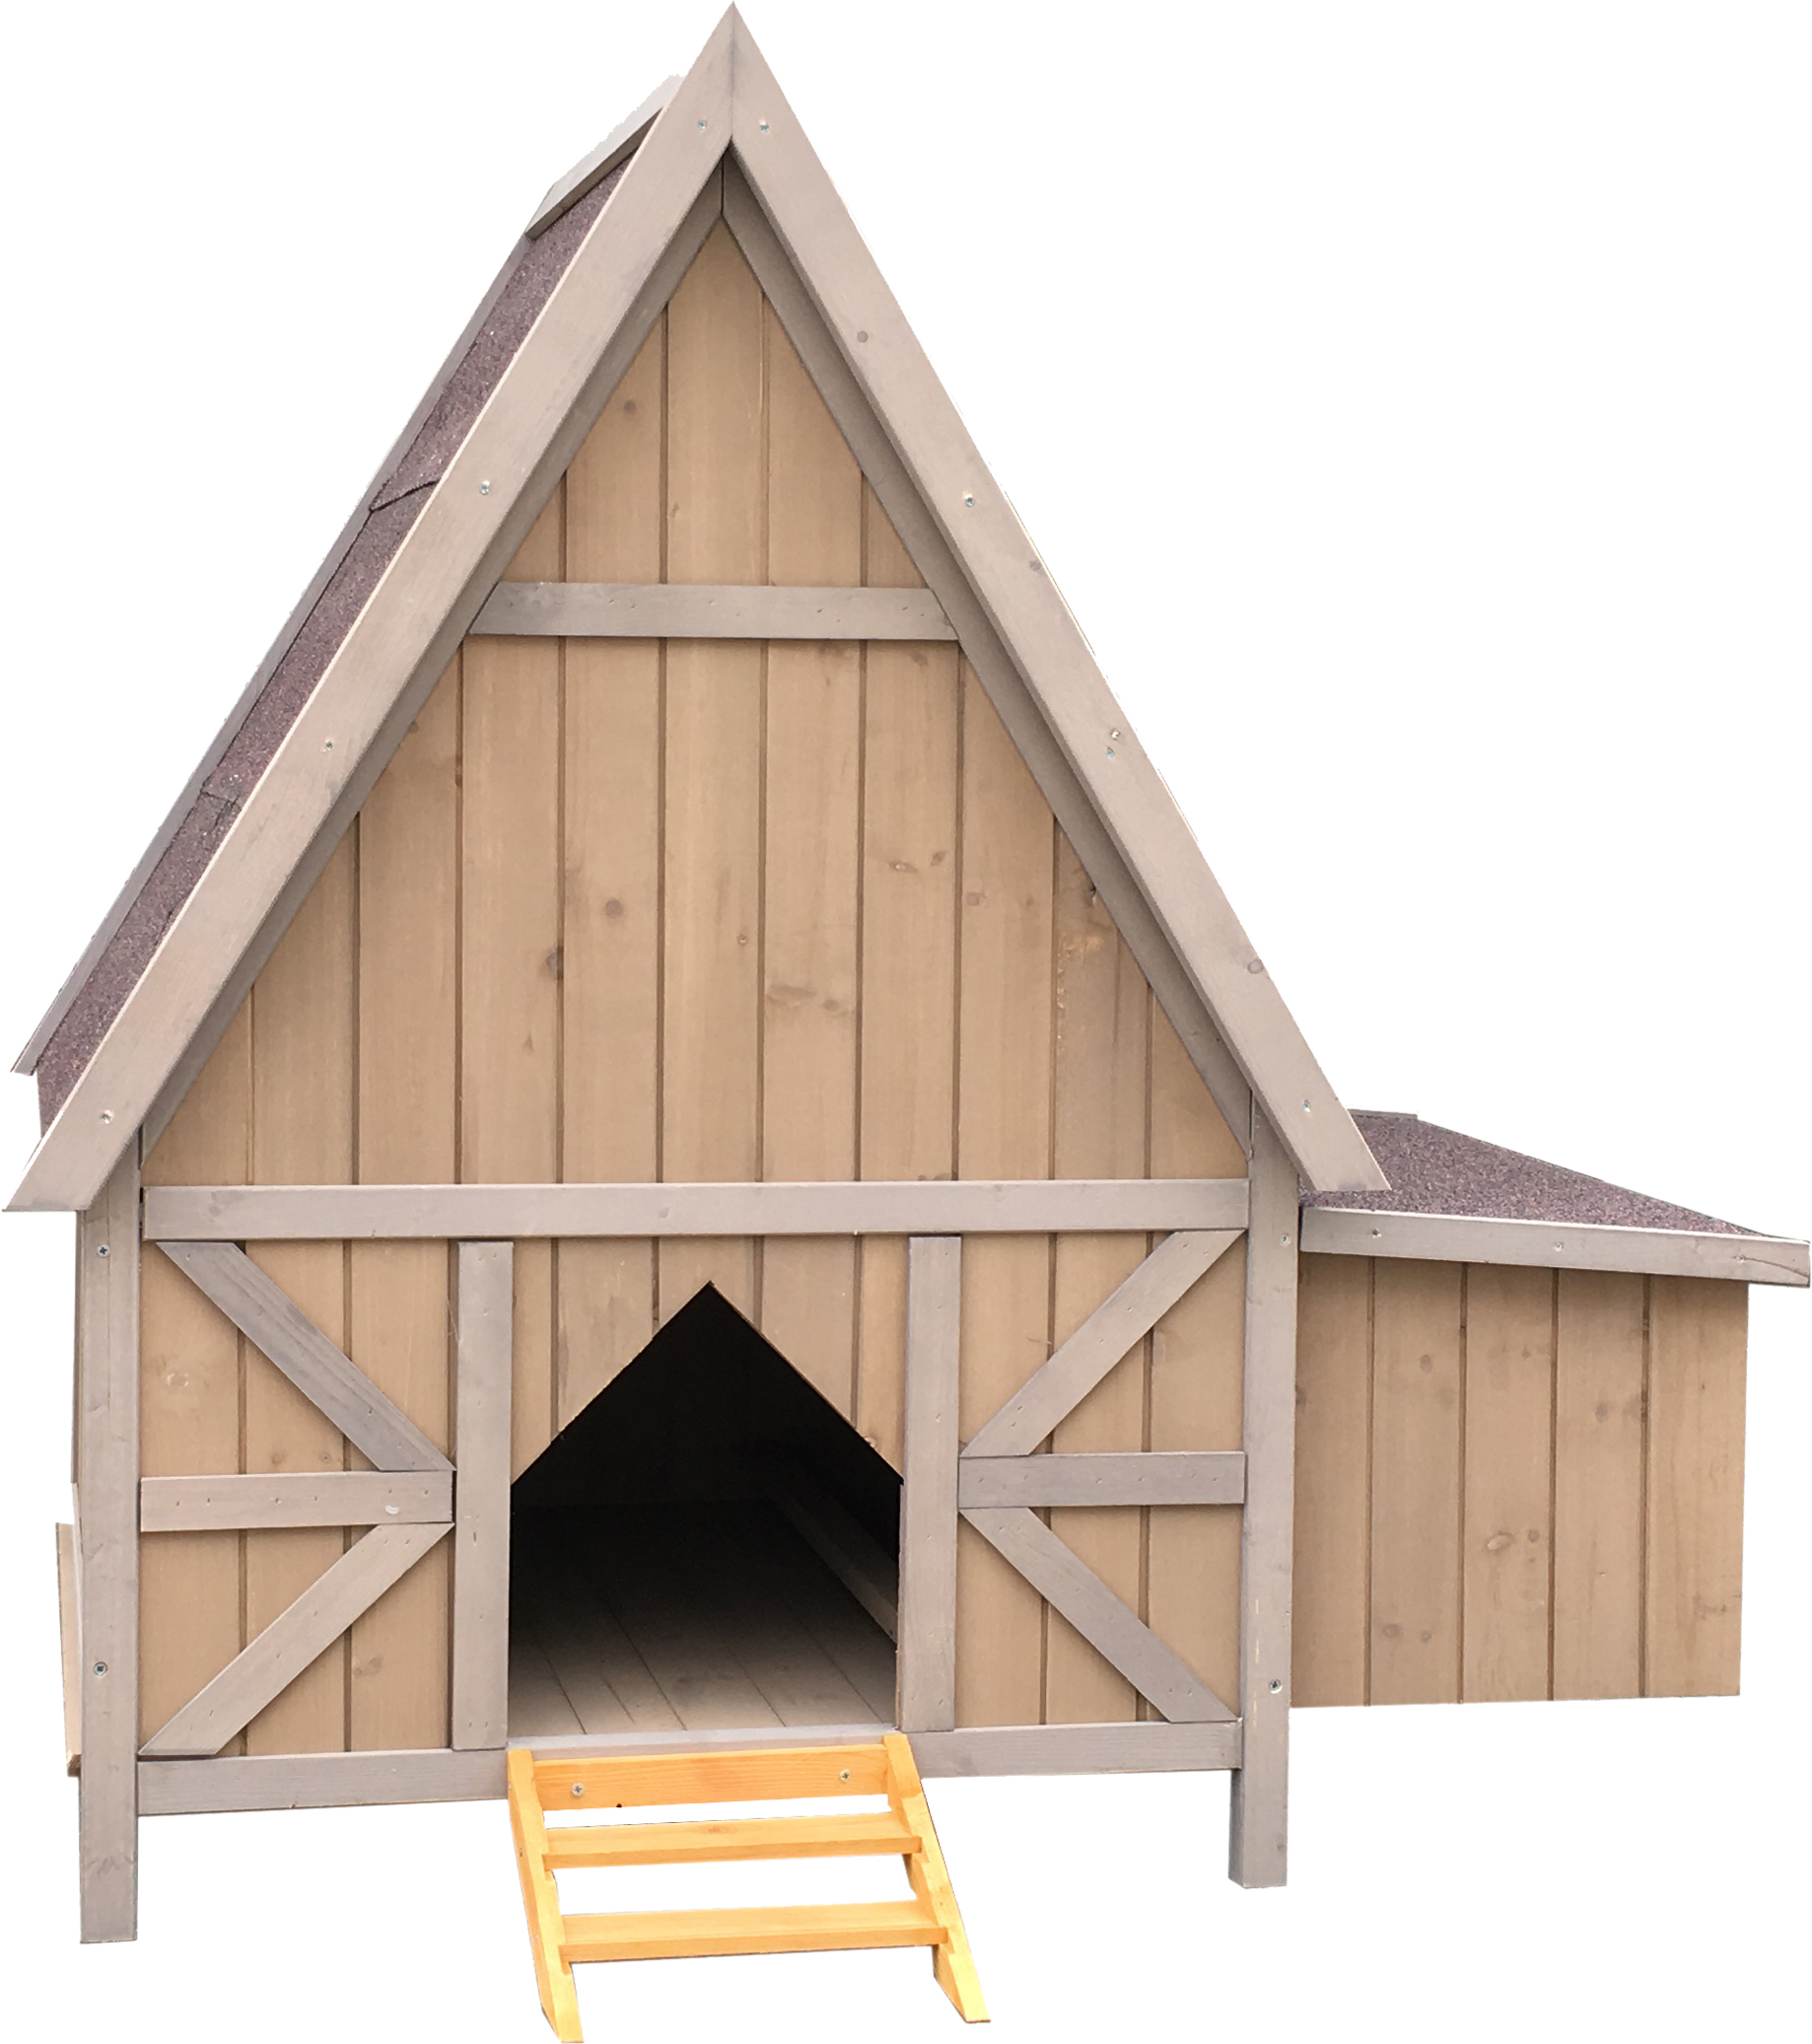 2019 Good Quality Wooden Chicken Cage -
 Outdoor Garden Weatherproof Waterproof Roof Ladder and Egg Box small backyard wooden chicken coop wholesale – Easy